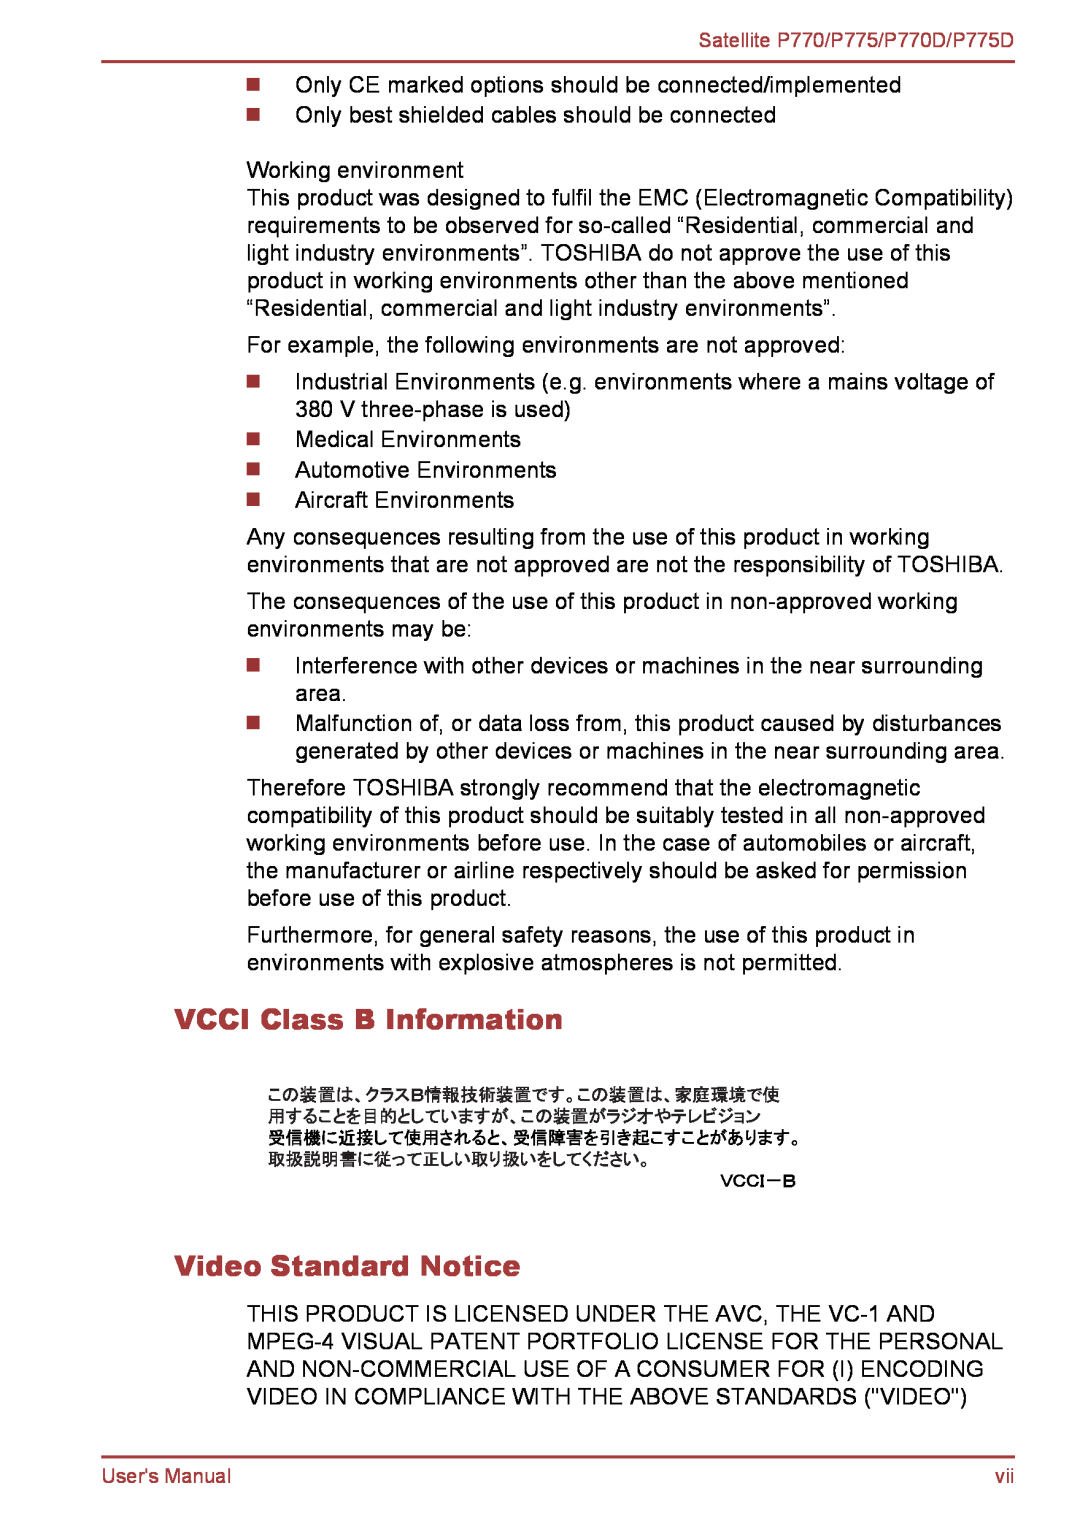 Toshiba P770 user manual VCCI Class B Information, Video Standard Notice 